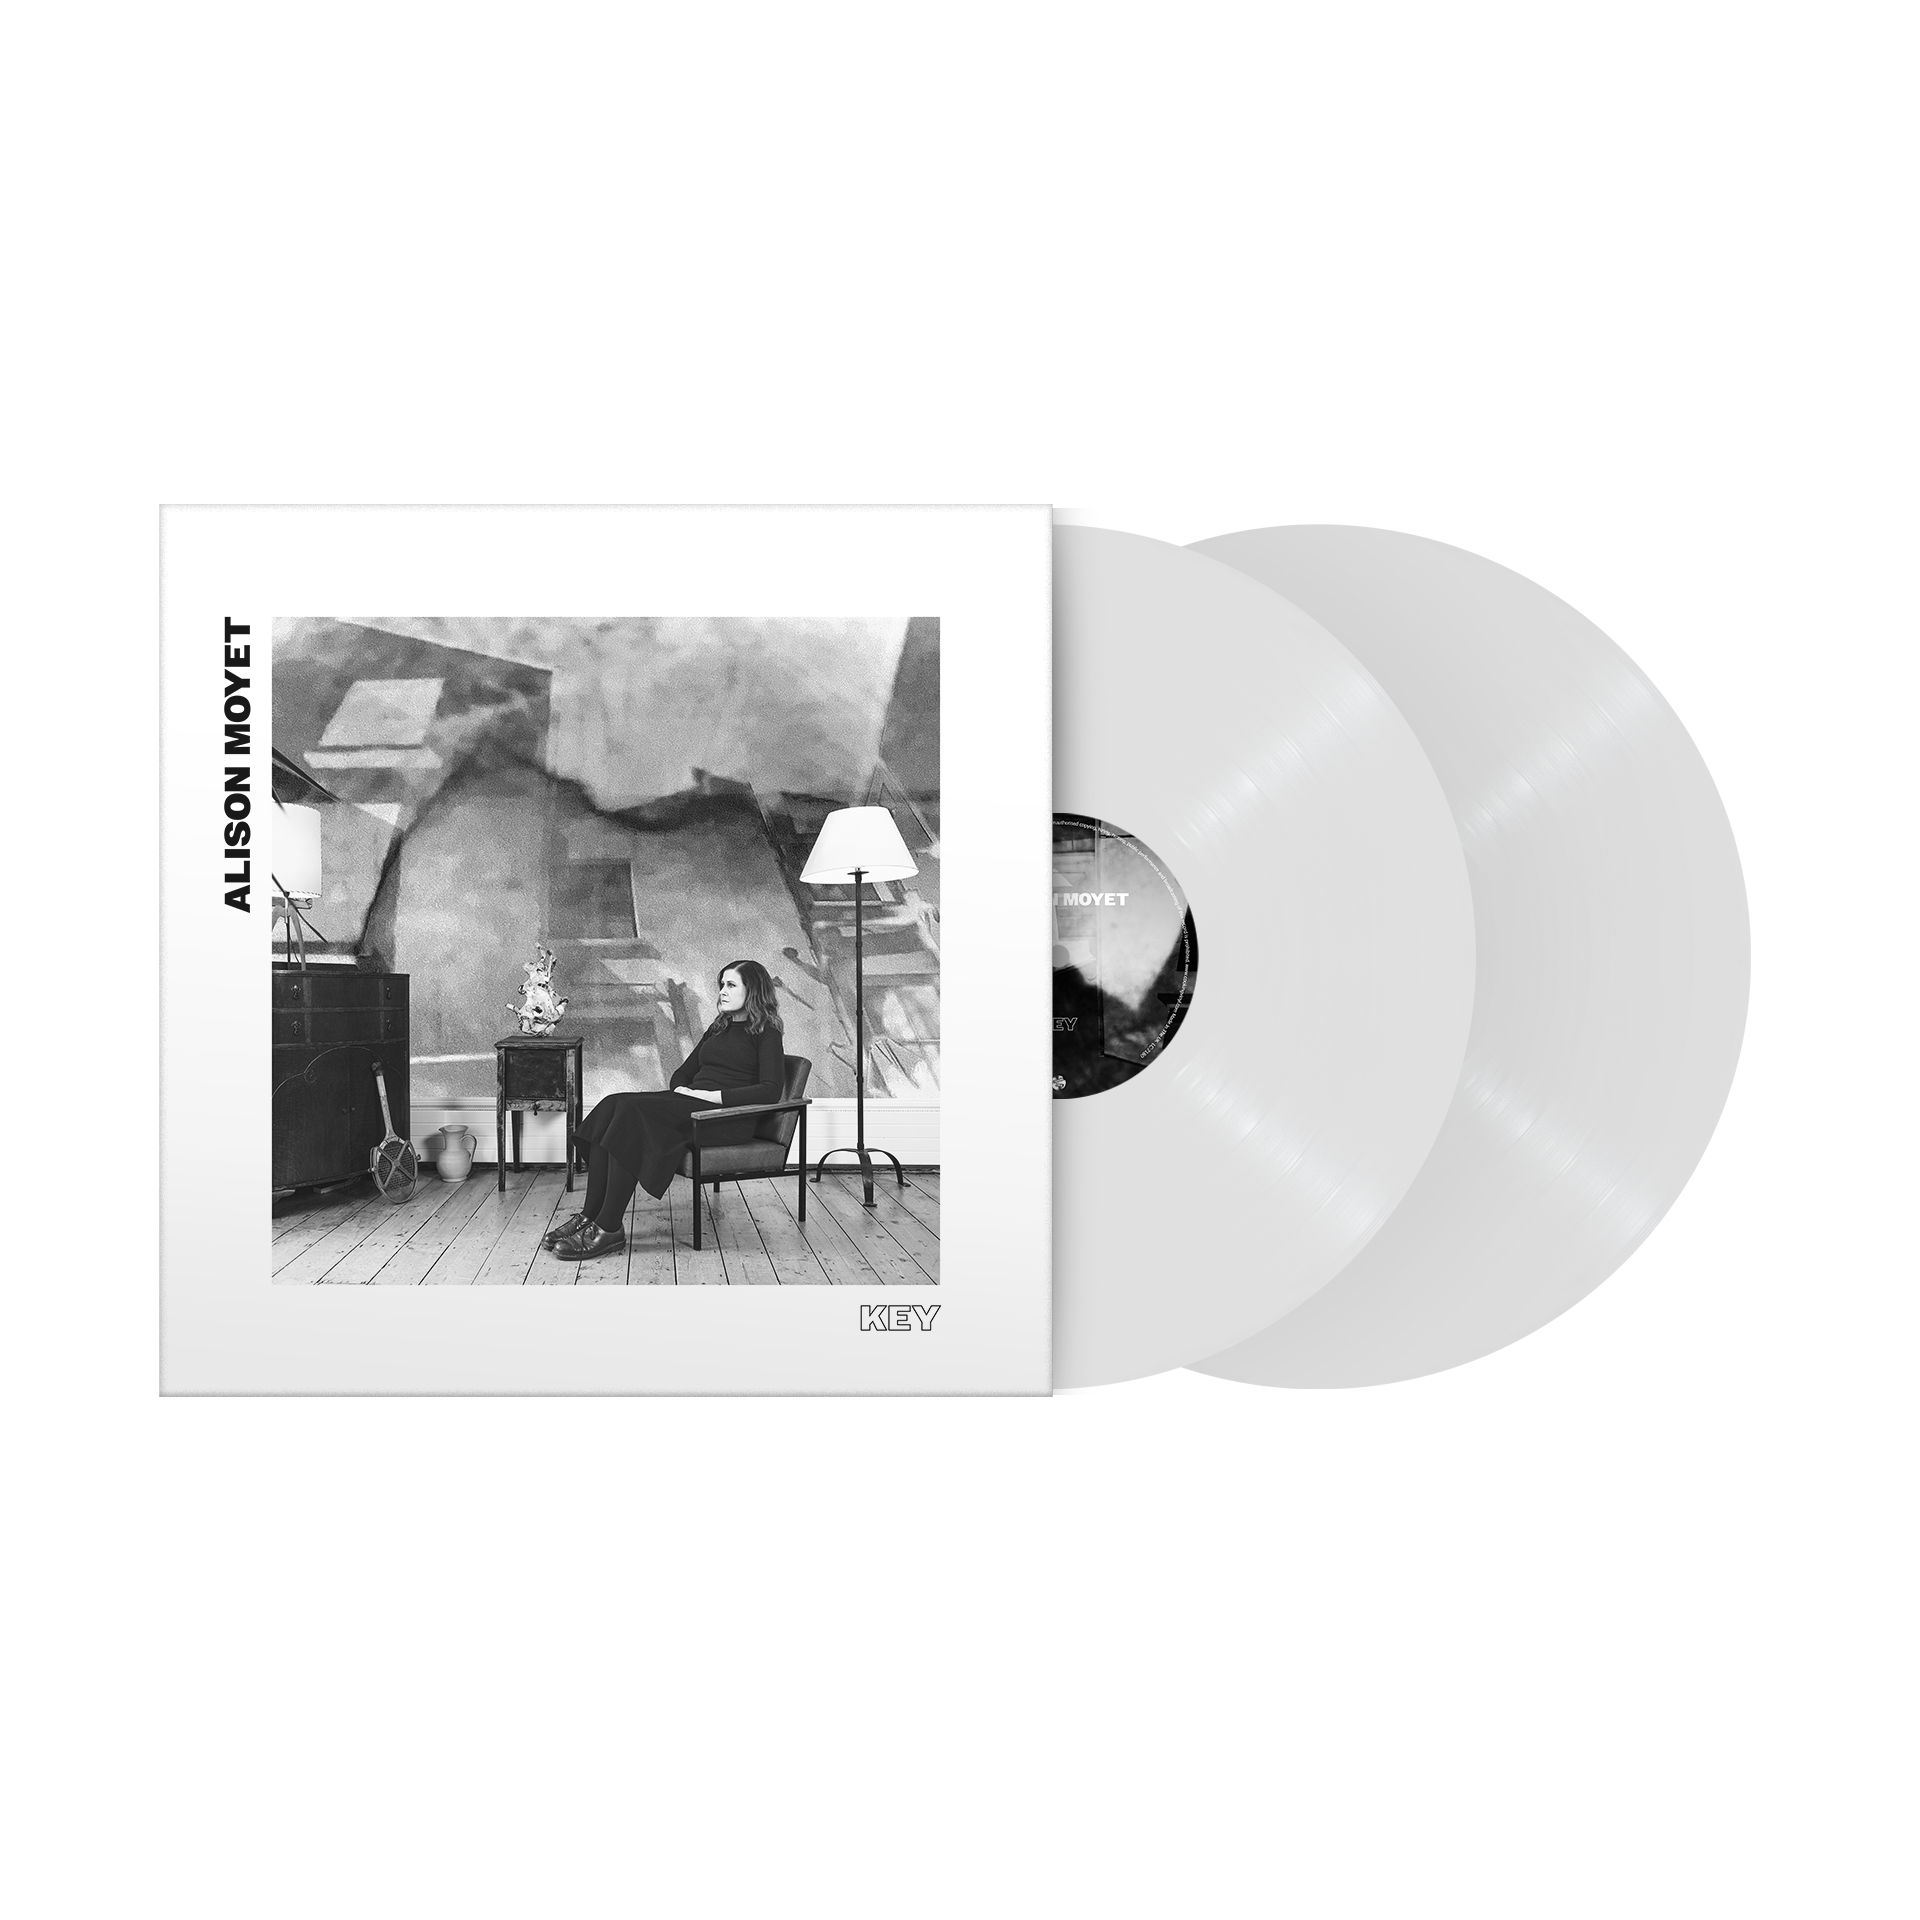 Alison Moyet - Key: Limited White Vinyl 2LP